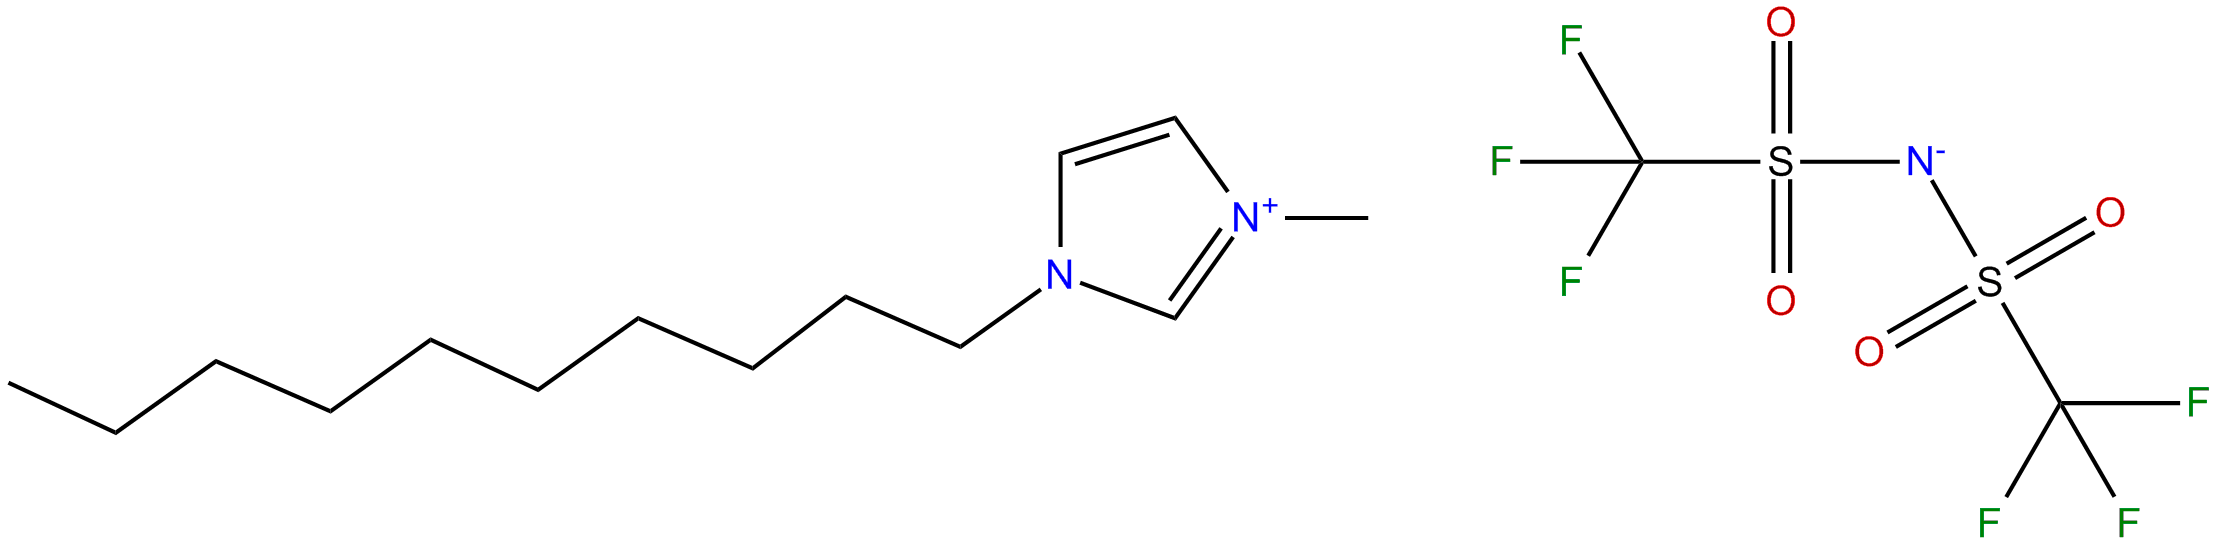 Image of 1-decyl-3-methylimidazolium bis(trifluoromethylsulfonyl)amide